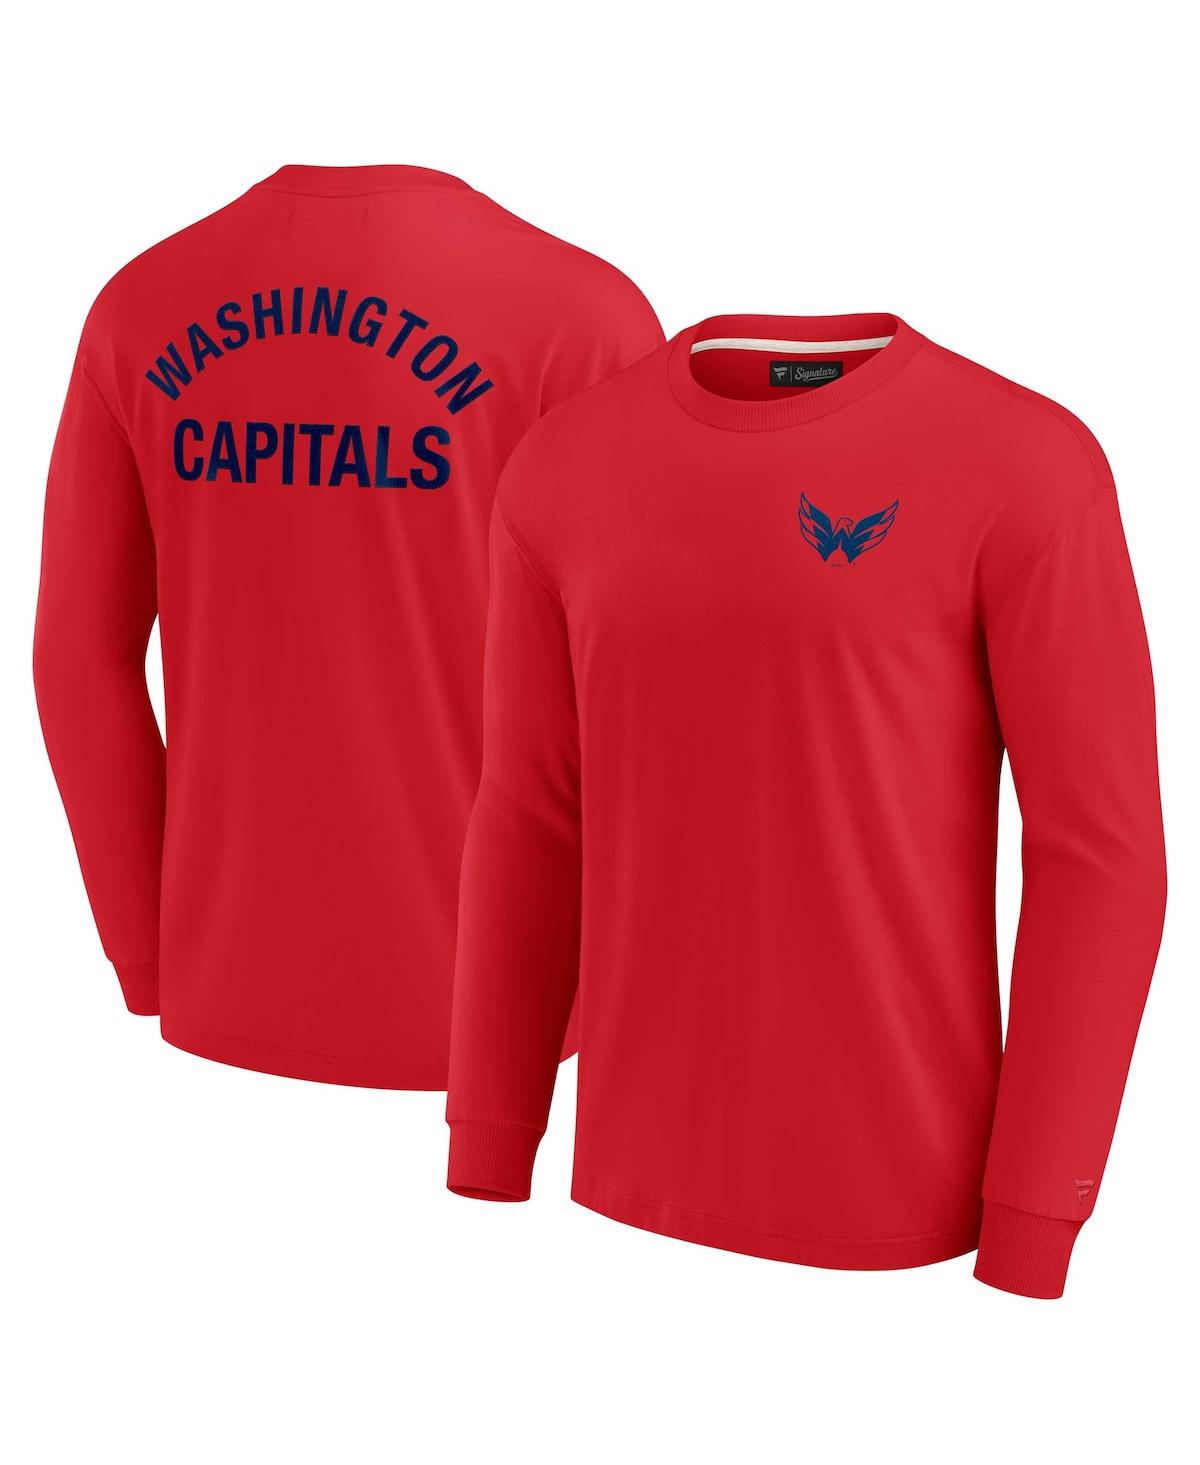 Men's and Women's Fanatics Signature Red Washington Capitals Super Soft Long Sleeve T-shirt - Red